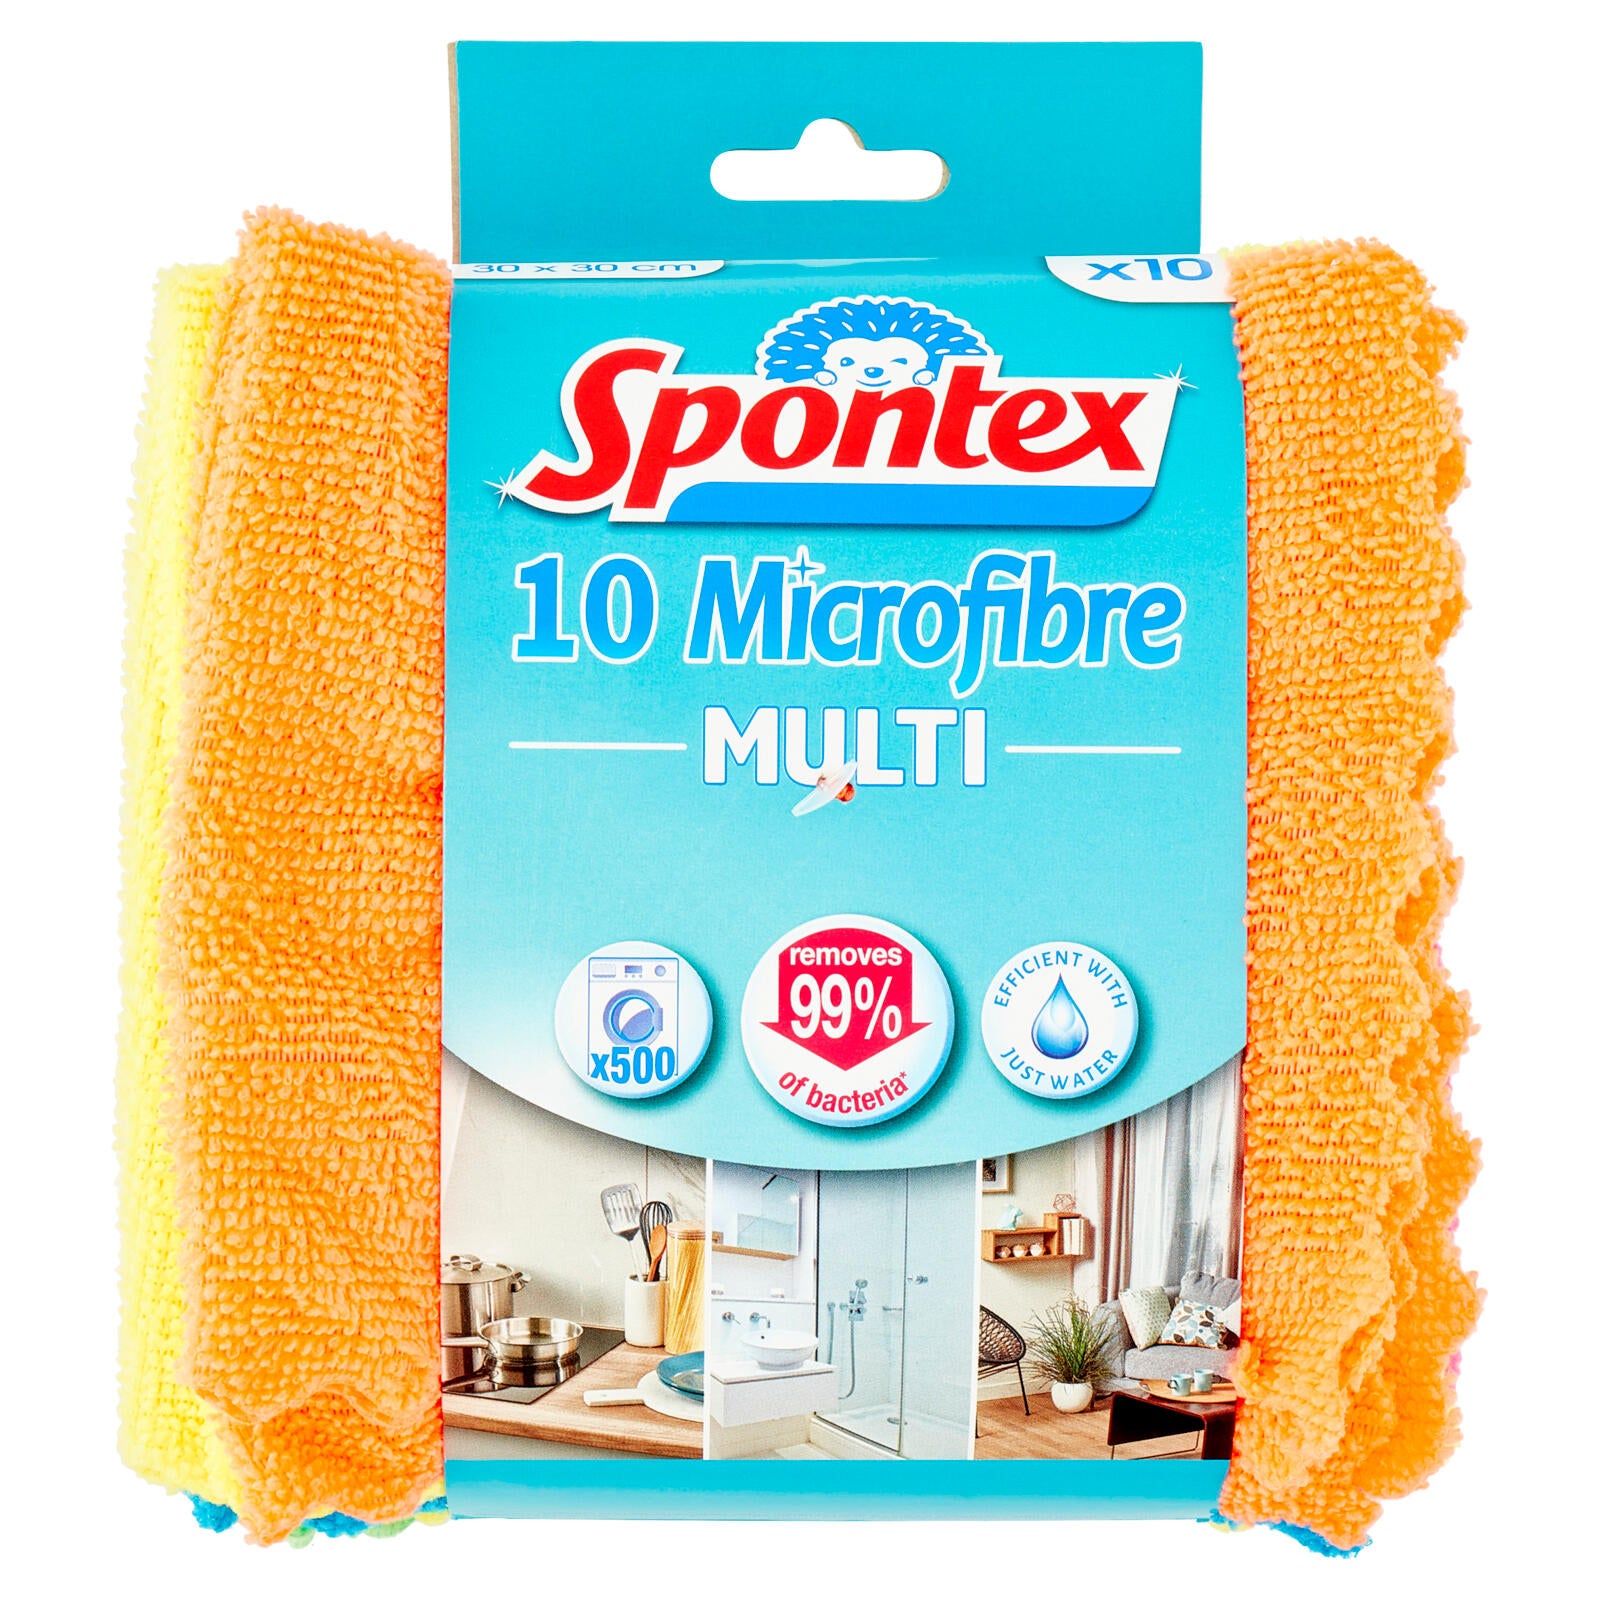 Spontex Microfibre x10